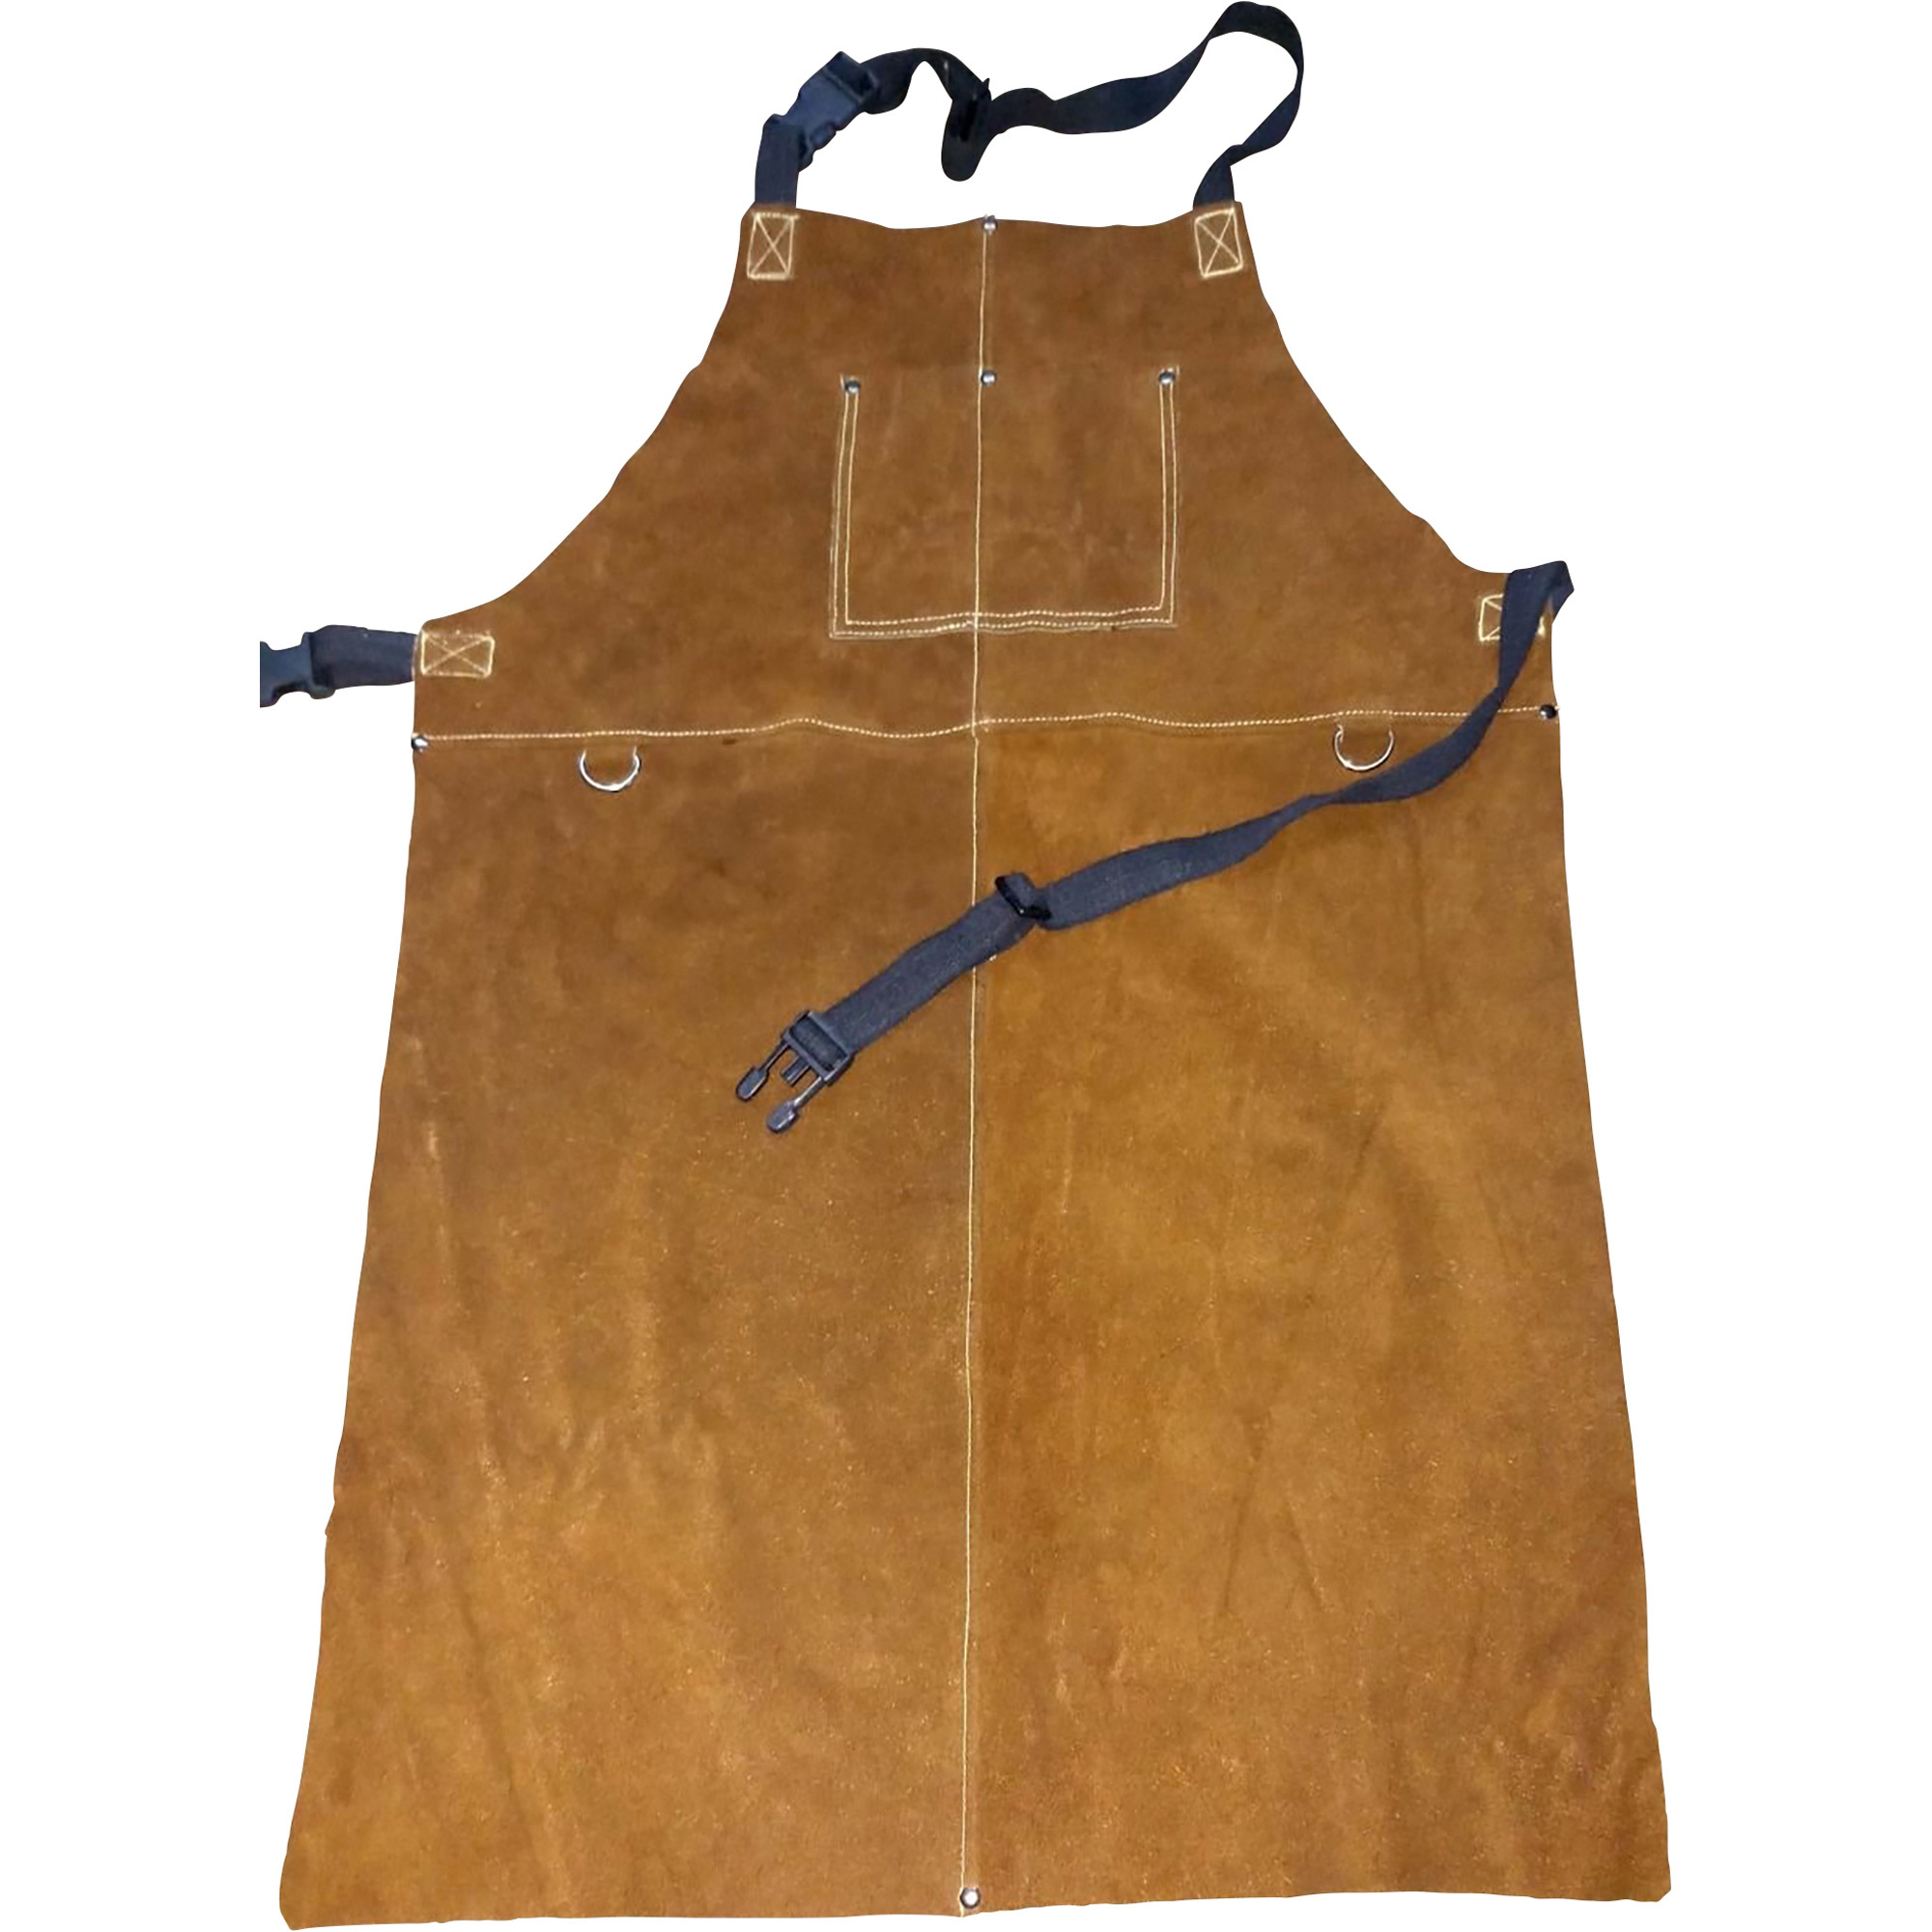 Ironton Leather Welding Apron â Extra Large, Brown